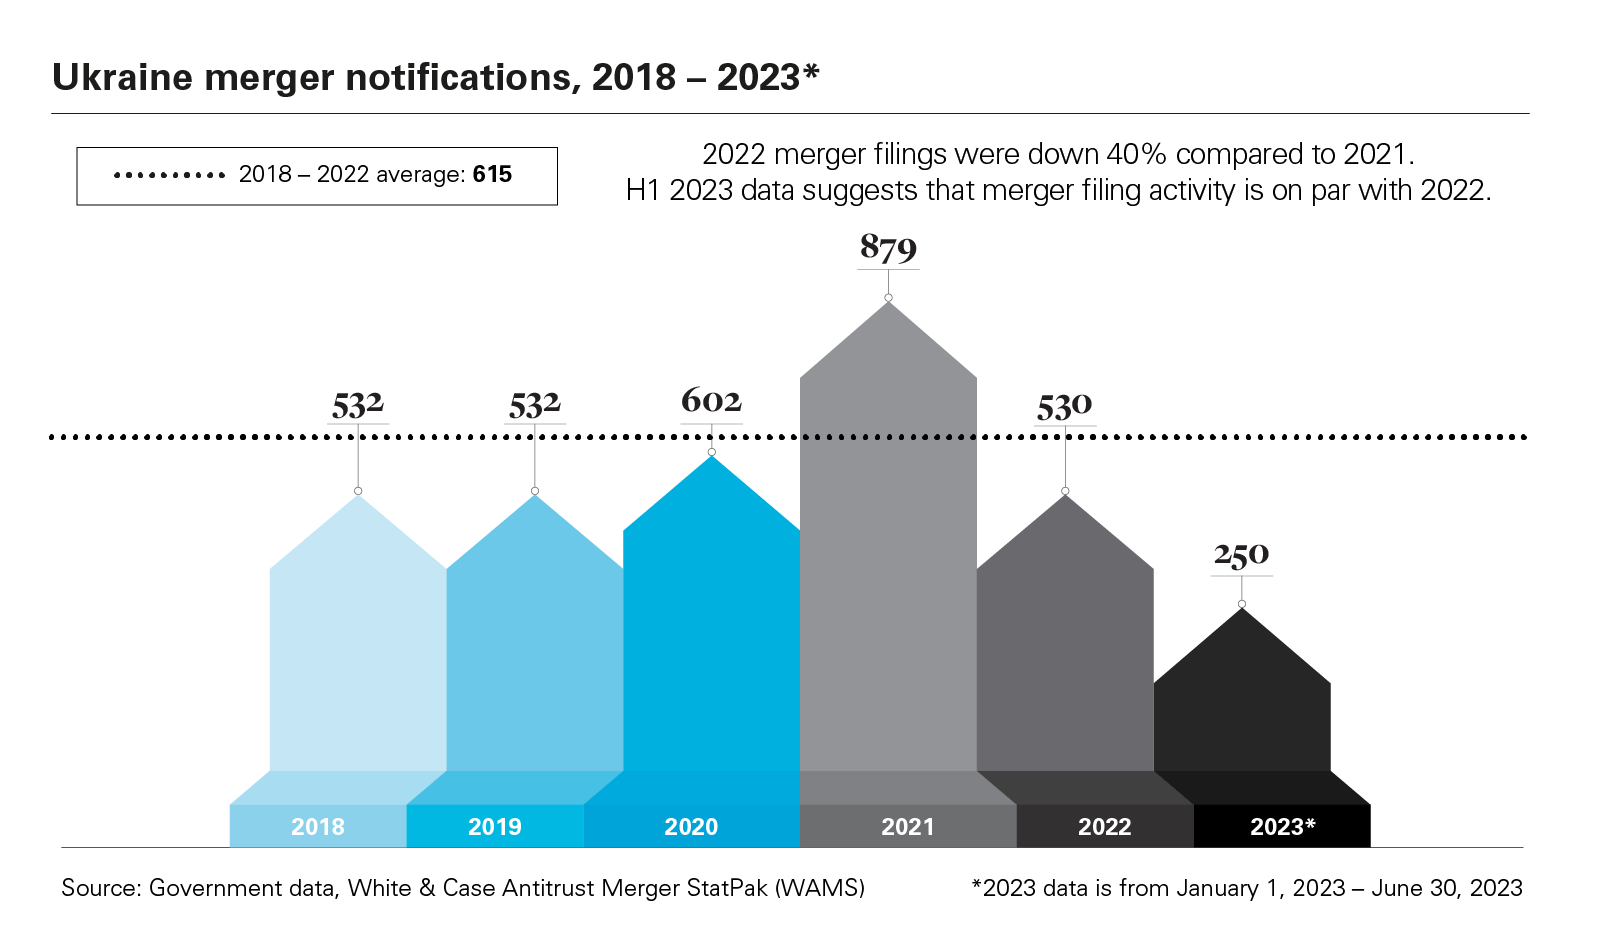 Ukraine merger notifications, 2018 - 2023* graph